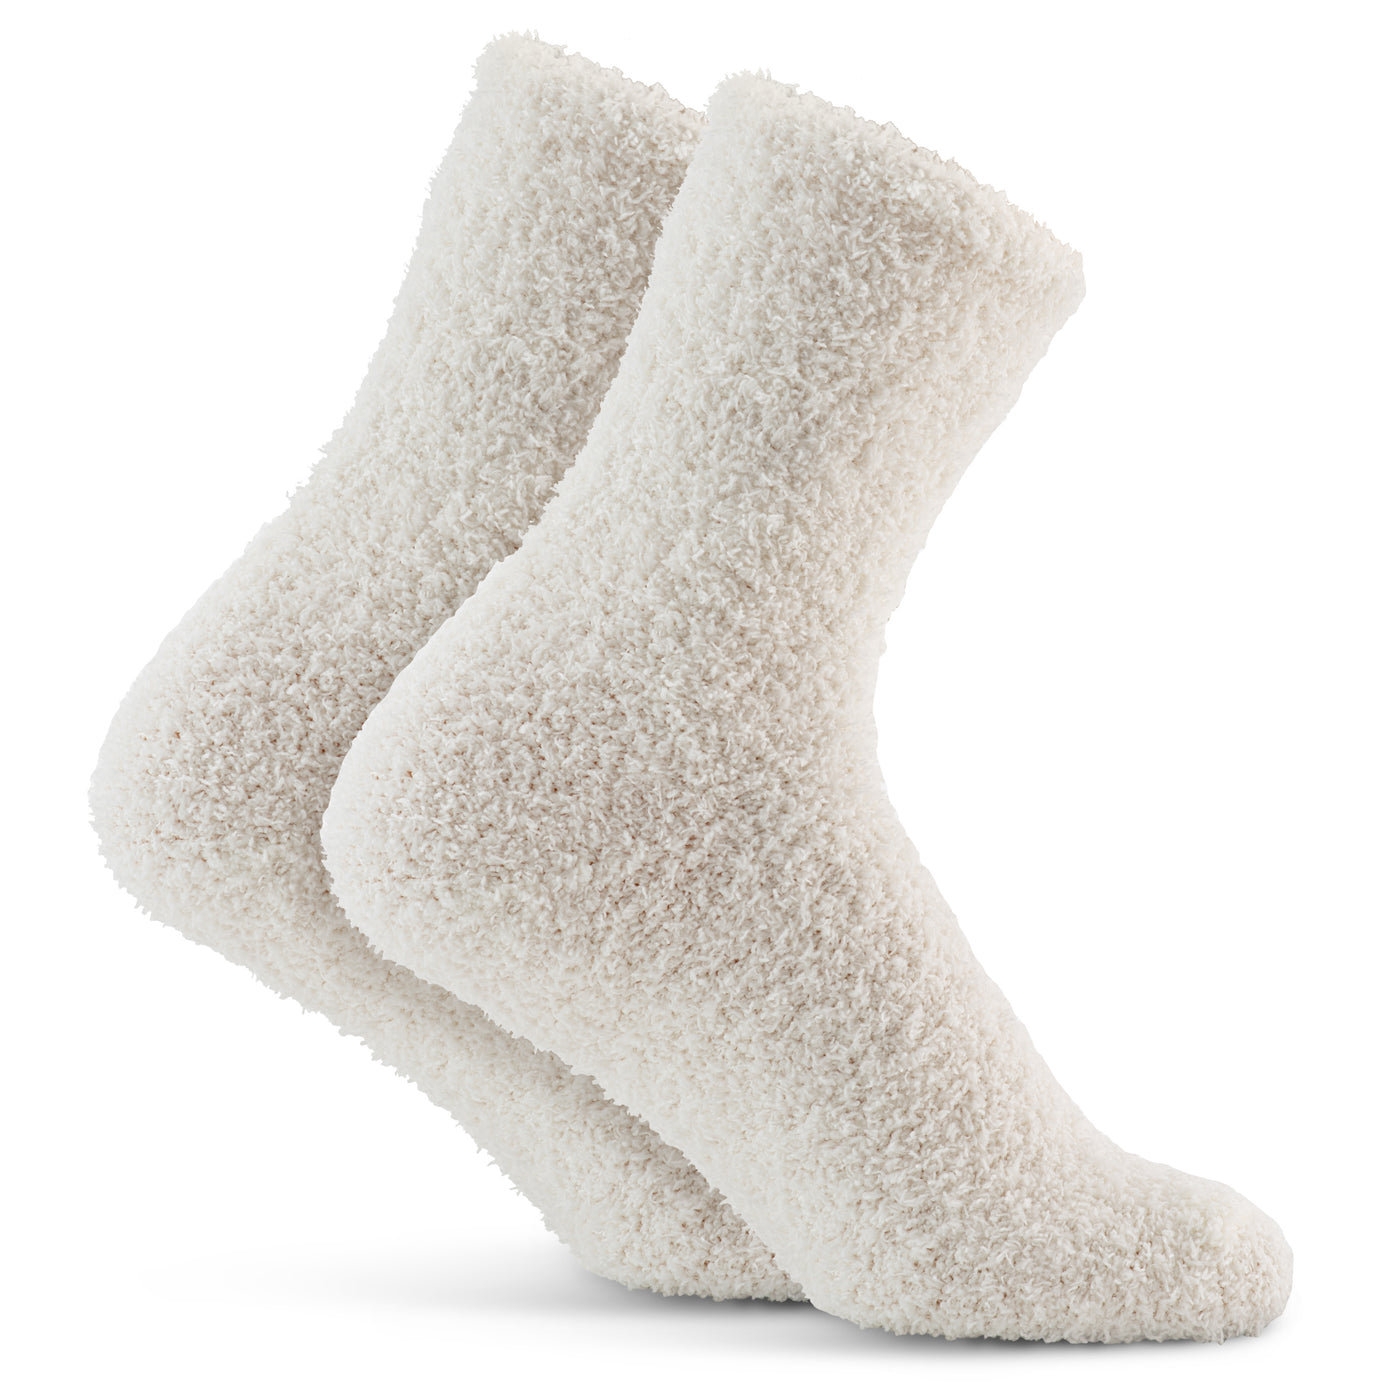 Plain Cosy Socks - White